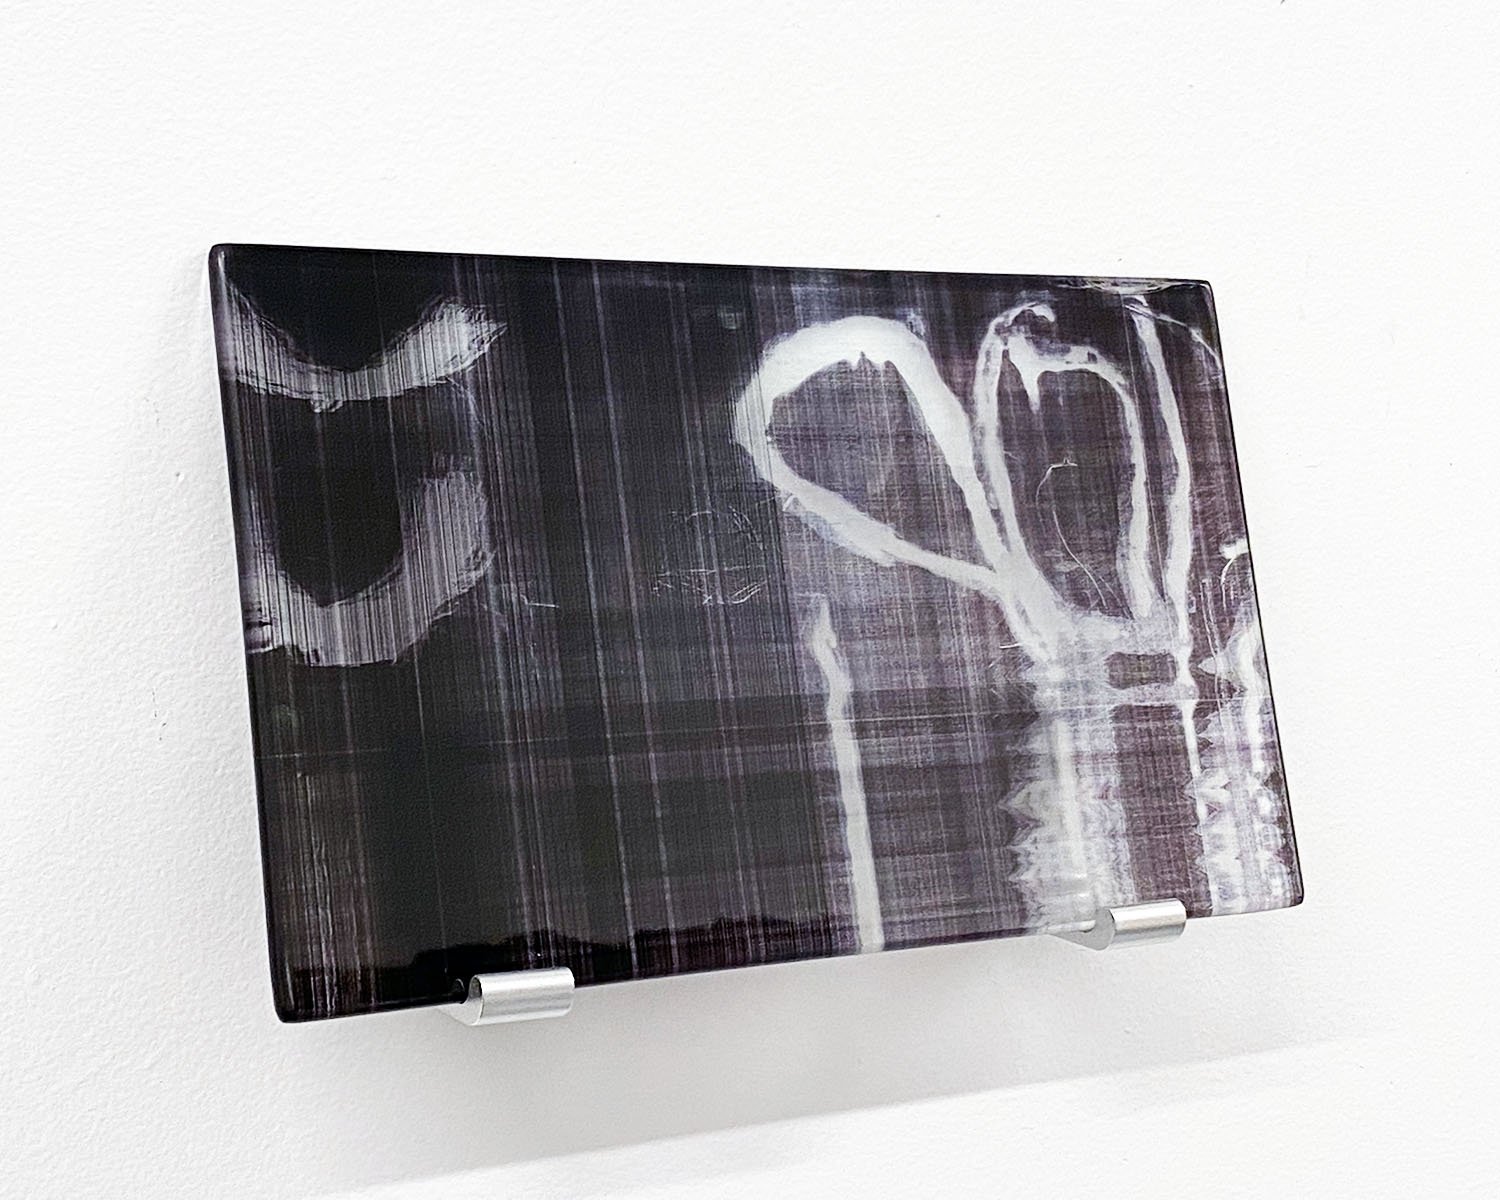   #010  2019 UV print on glass 5x7” 